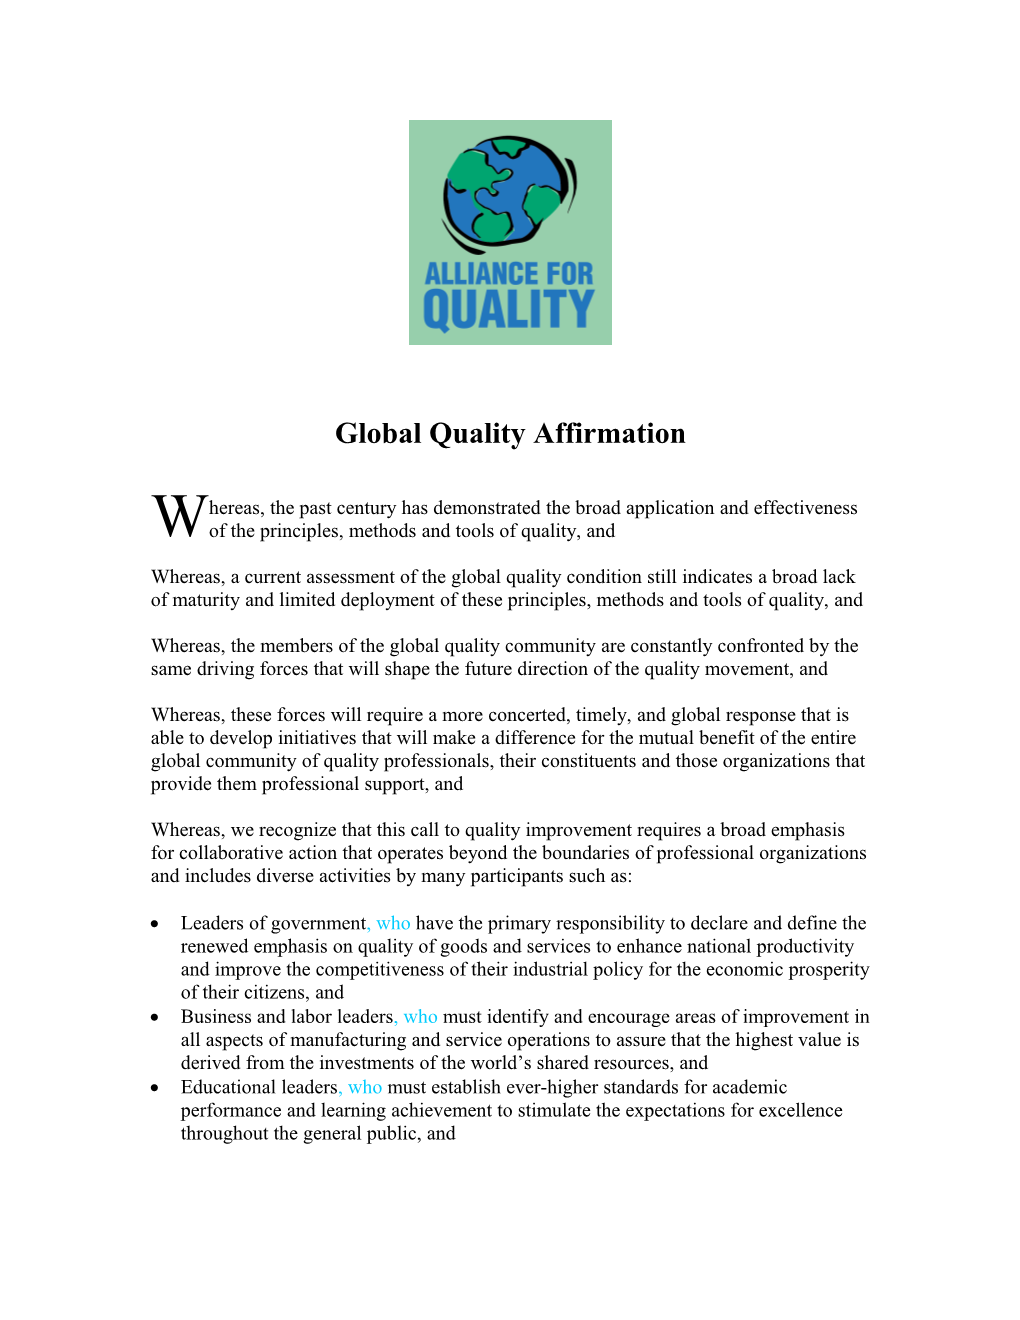 Global Quality Compact